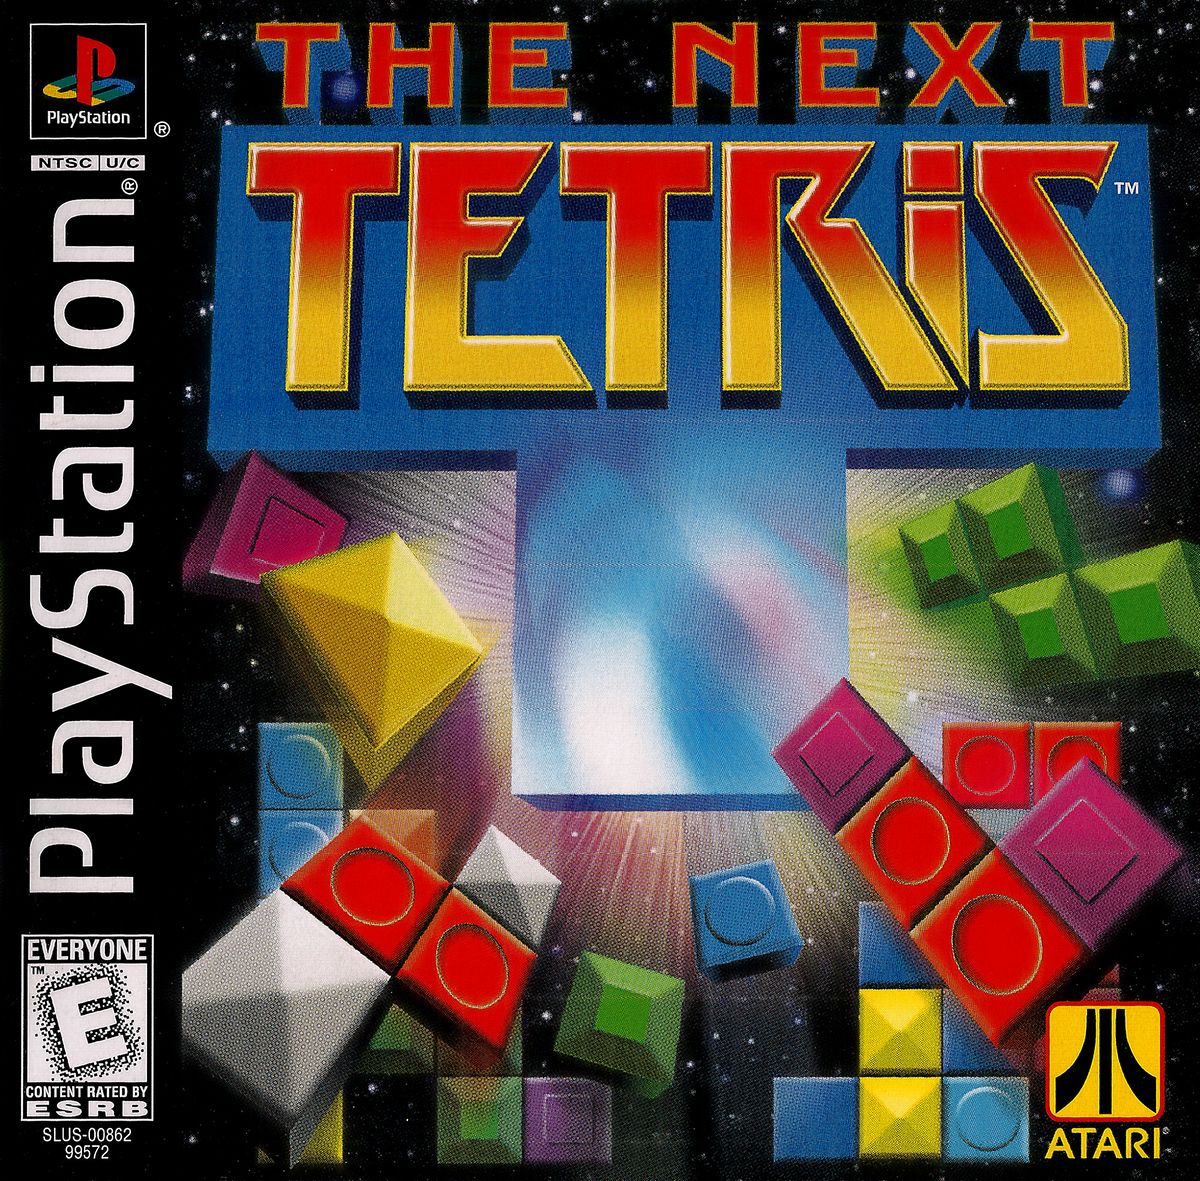 ps1 tetris games